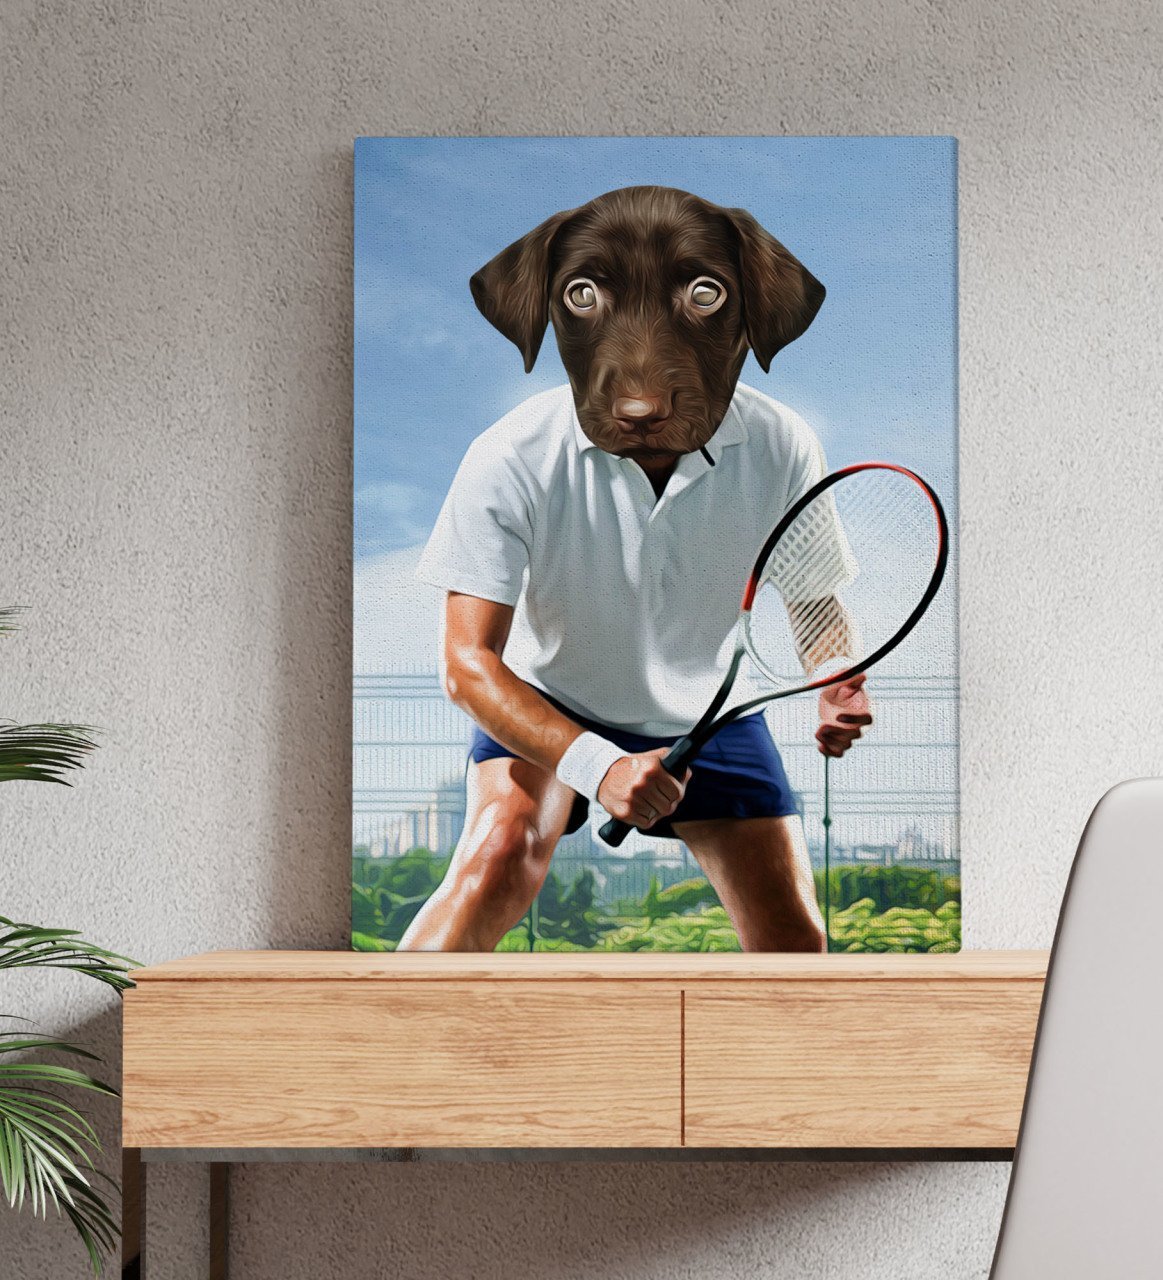 Evcil Dostlara Özel Tenis Oyuncusu Tasarımlı Portre Kanvas Tablo 50x70cm-3